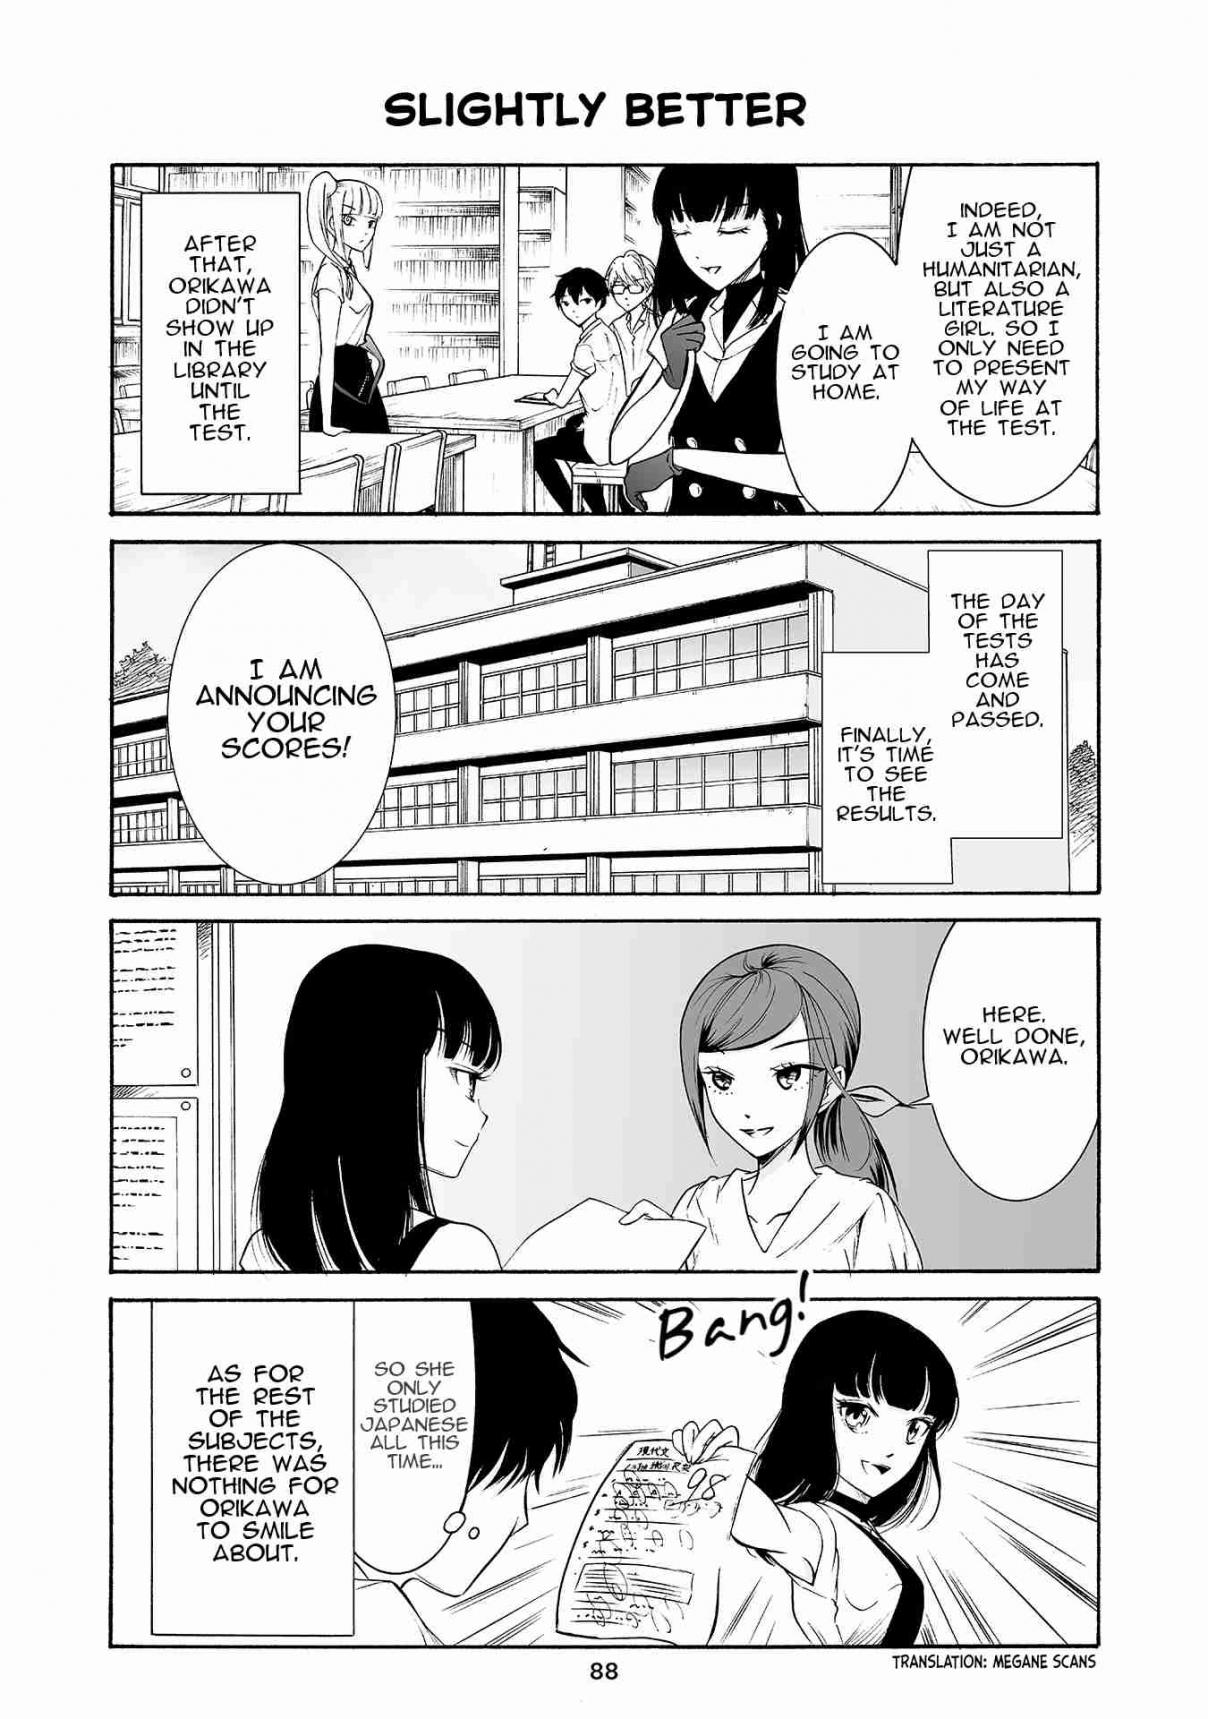 Kuzu to Megane to Bungaku Shoujo (Nise) Vol. 2 Ch. 171 Slightly better